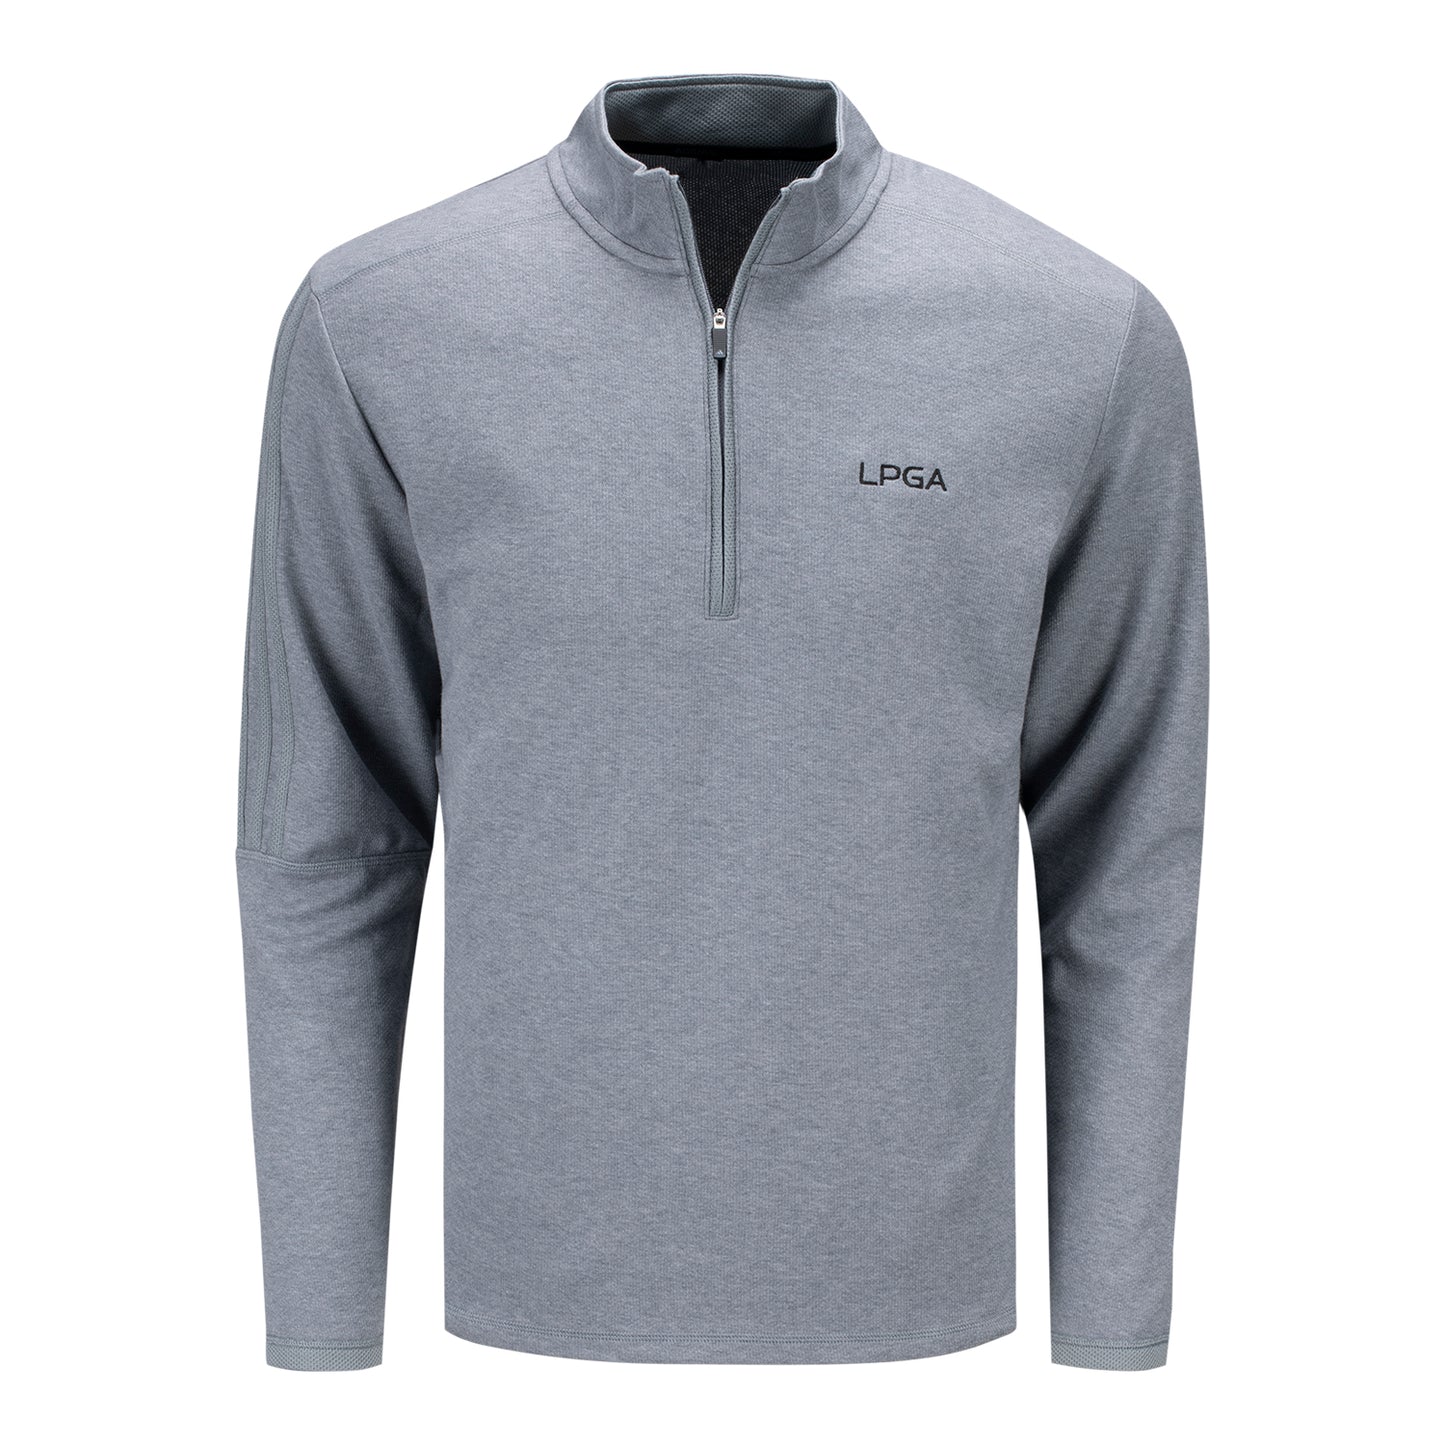 Adidas LPGA Golf Men's 3-Stripe Quarter Zip - Front View